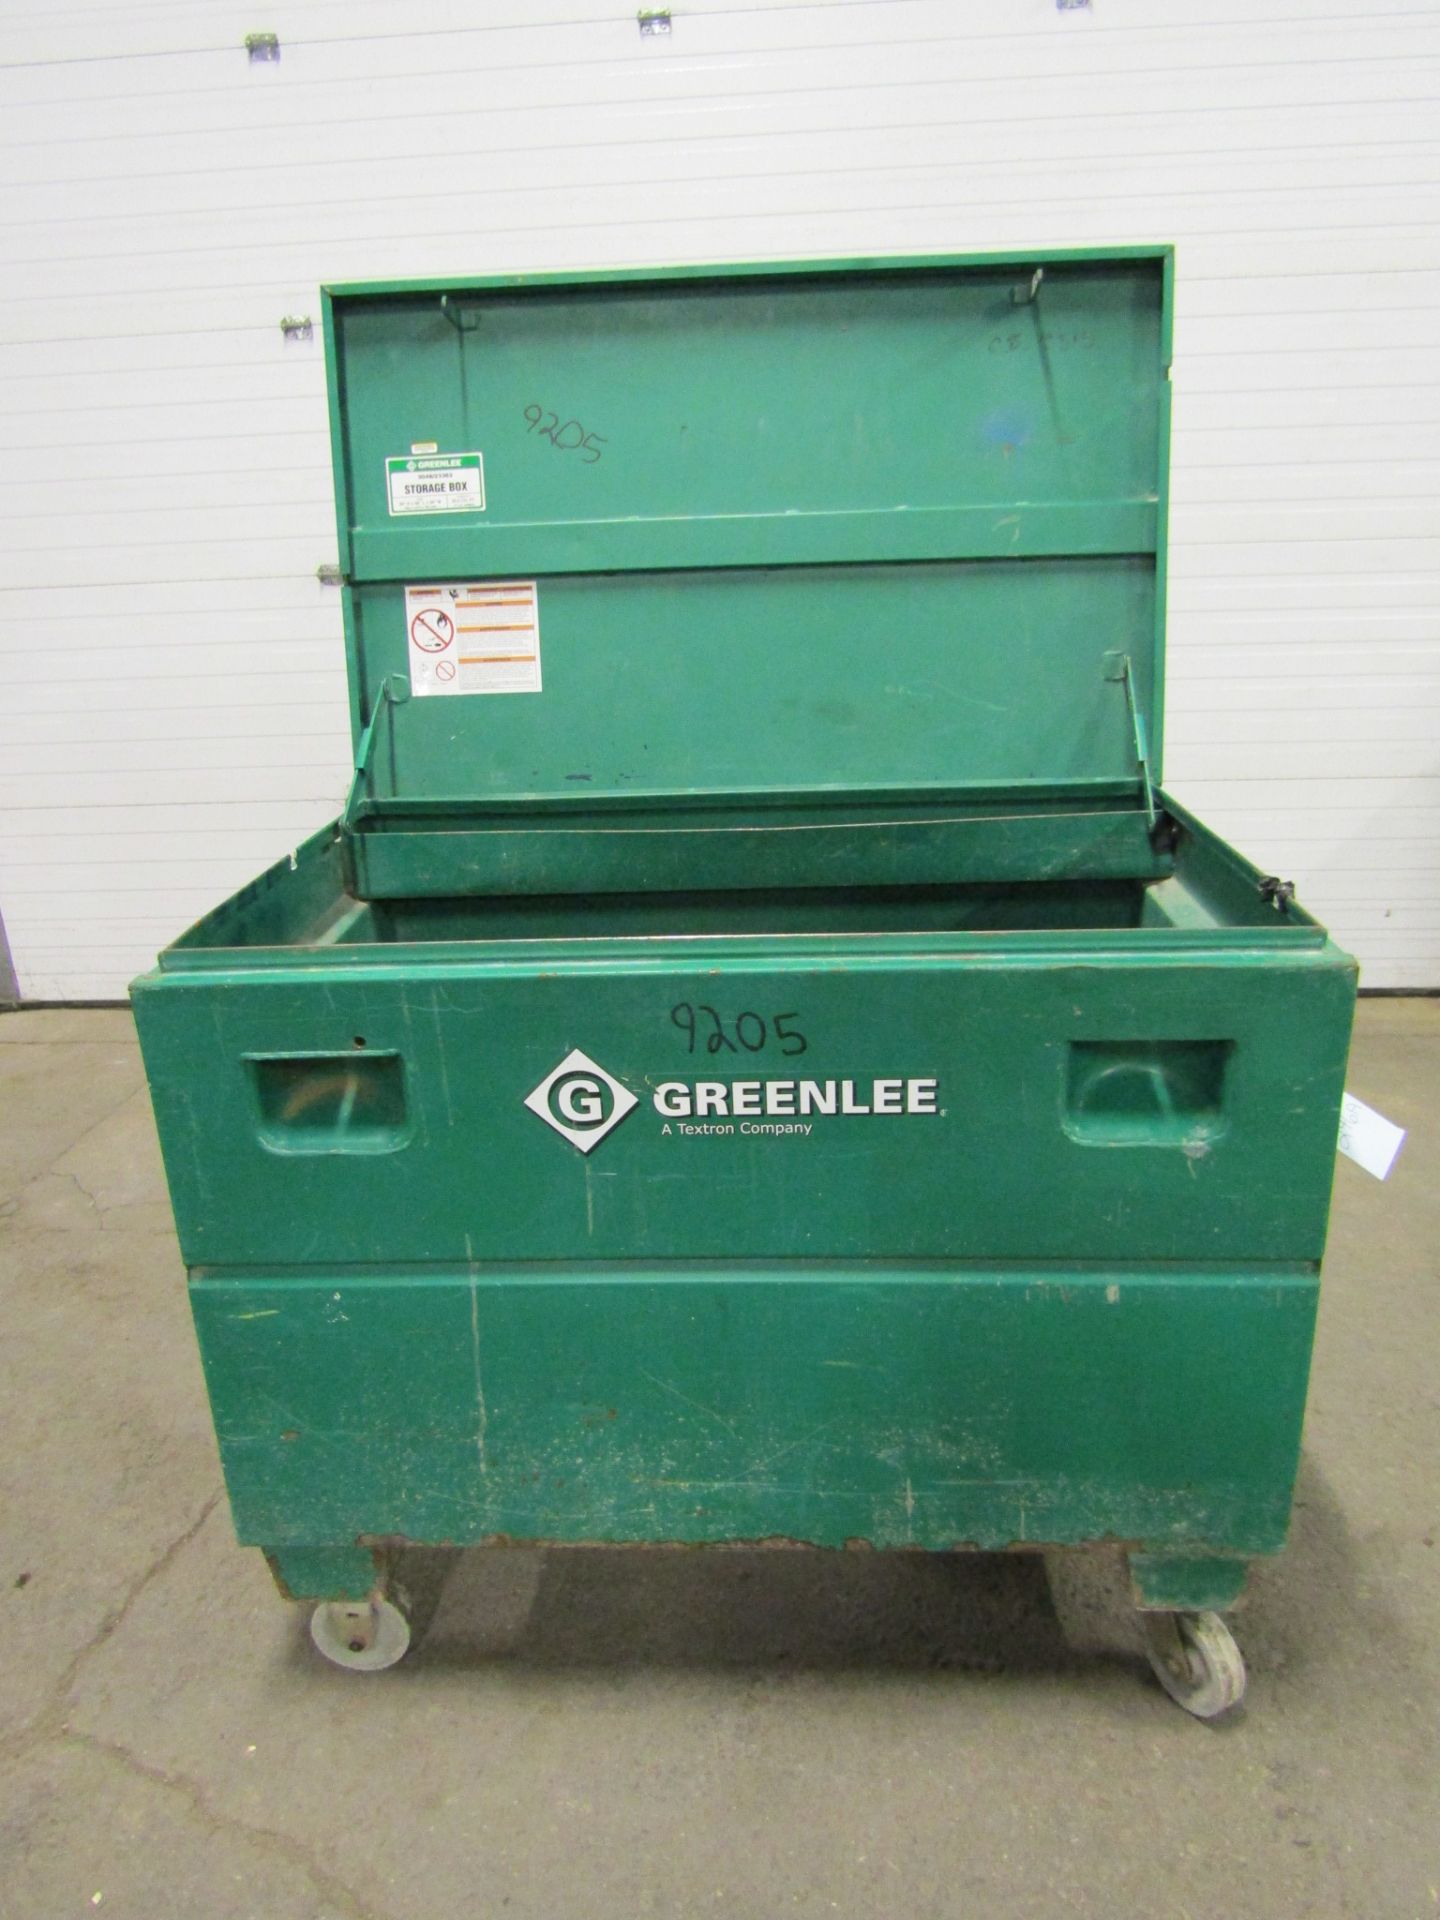 Greenlee Jobbox Storage Box model 3048/23362 heavy duty 30" x 48" x 30" wide